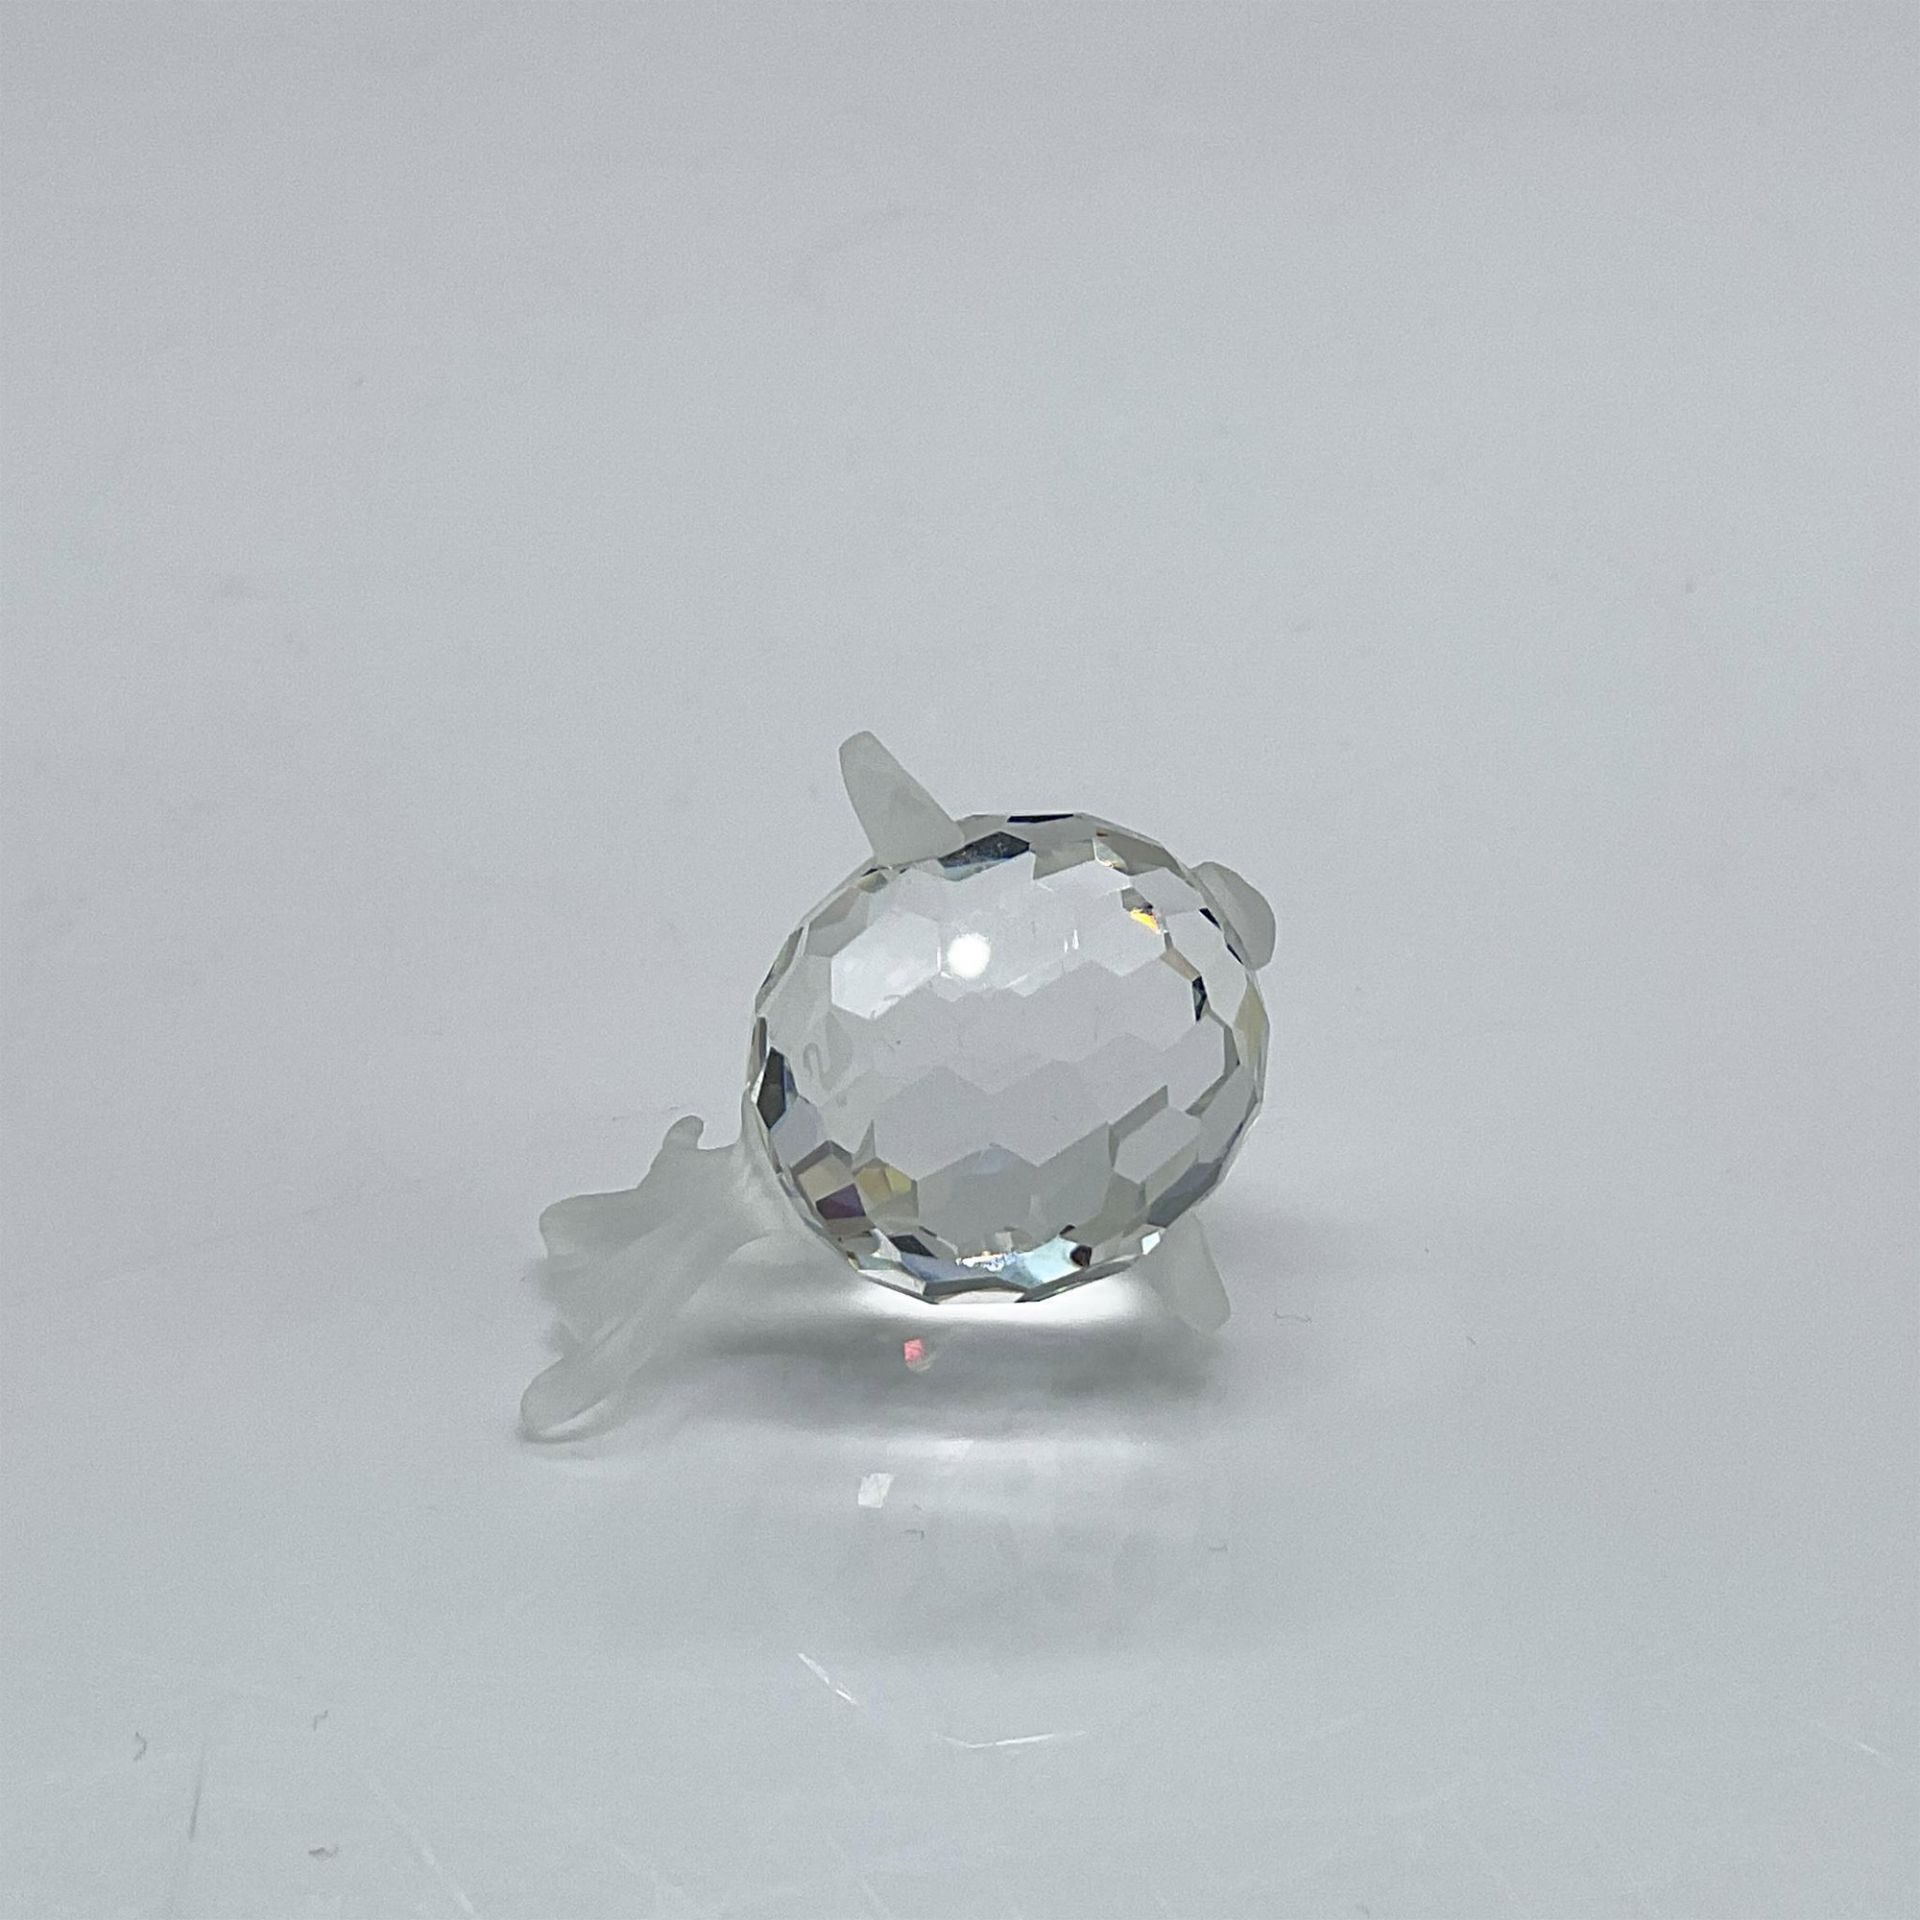 Swarovski Silver Crystal Figurine, Mini Blowfish - Image 4 of 5